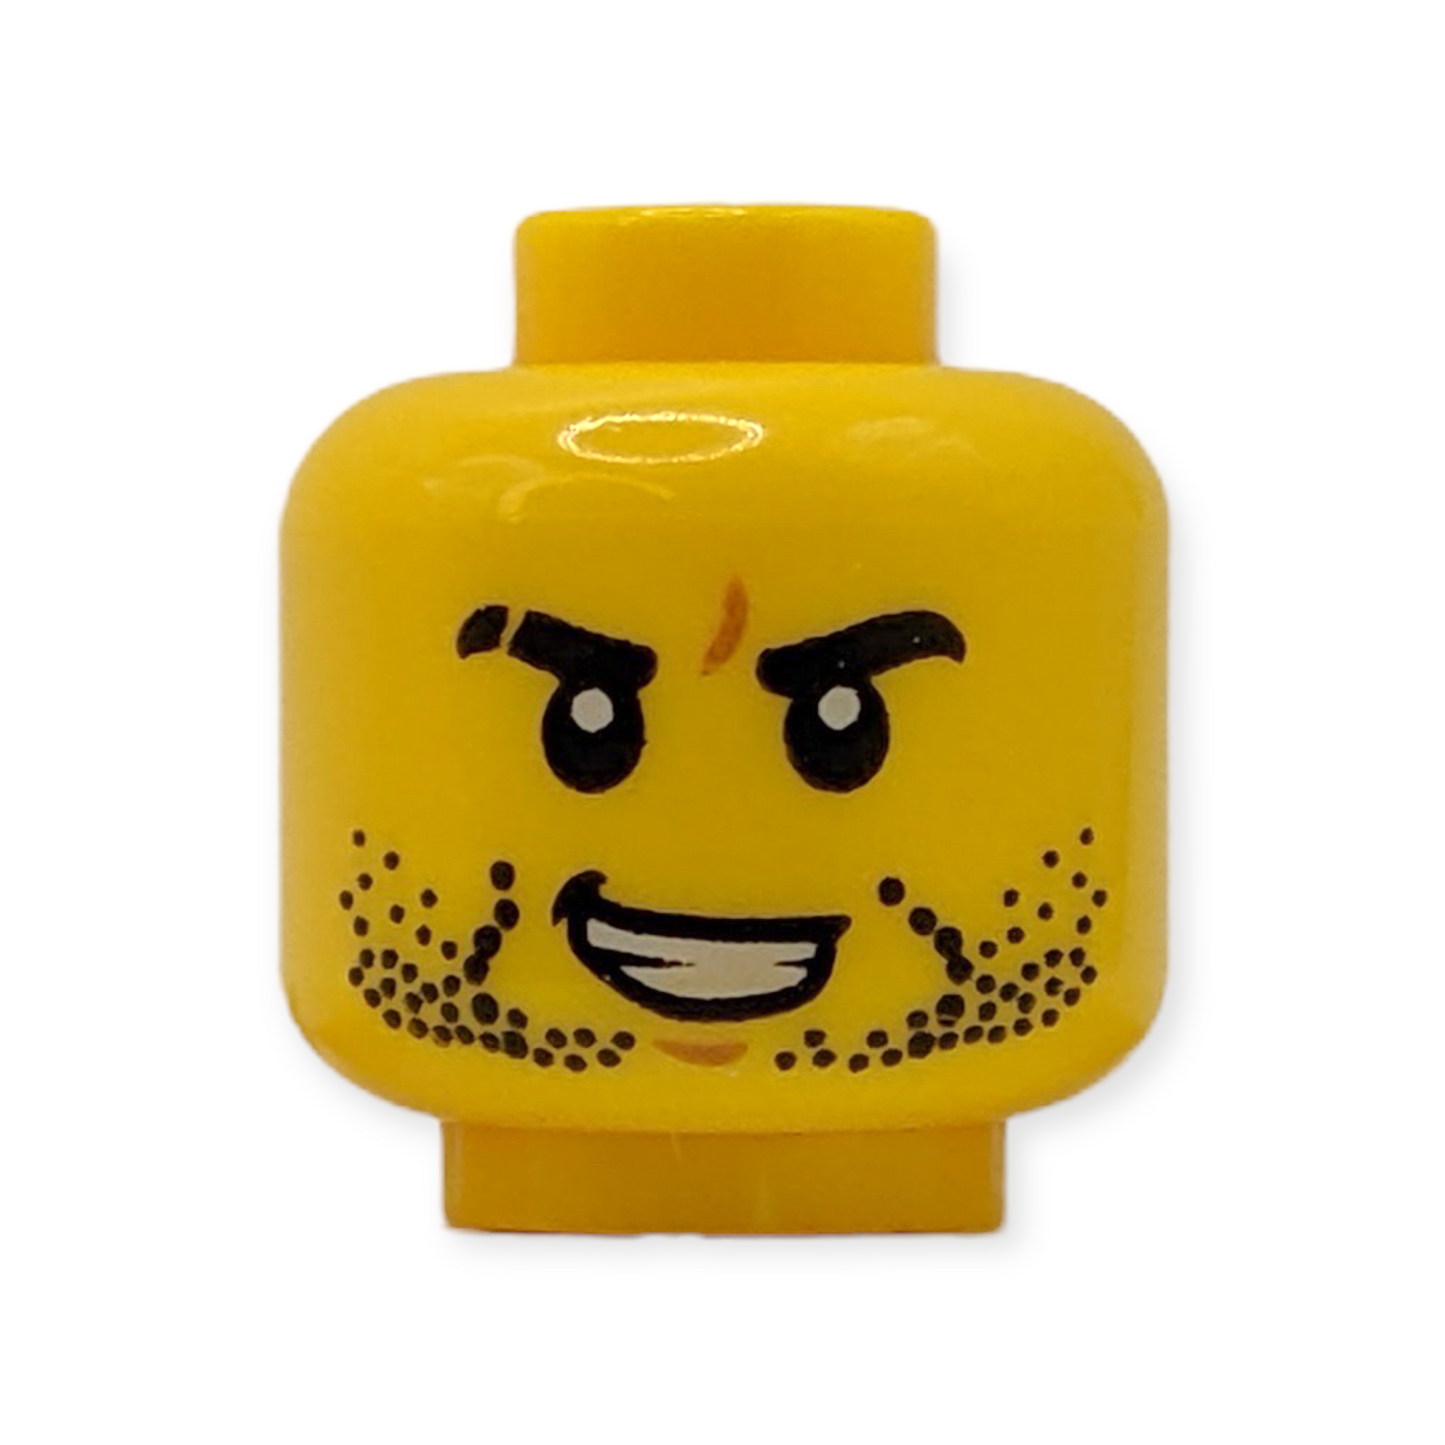 LEGO Head - 1638 Beard Stubble Black Eyebrows